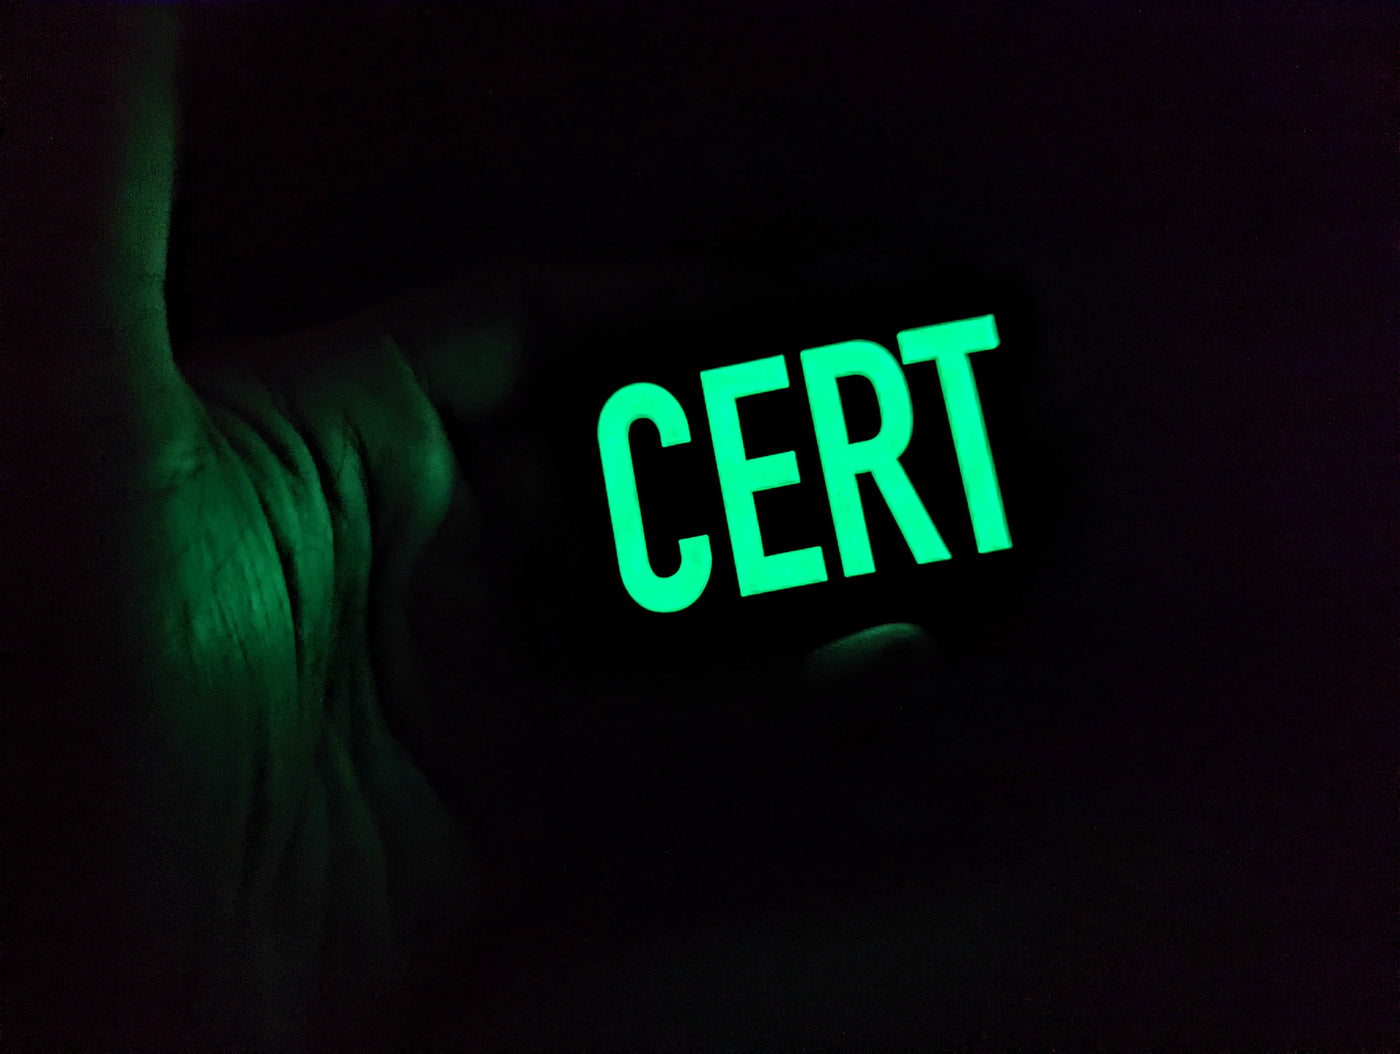 「 CERT 」2x3" PVC發光貼片